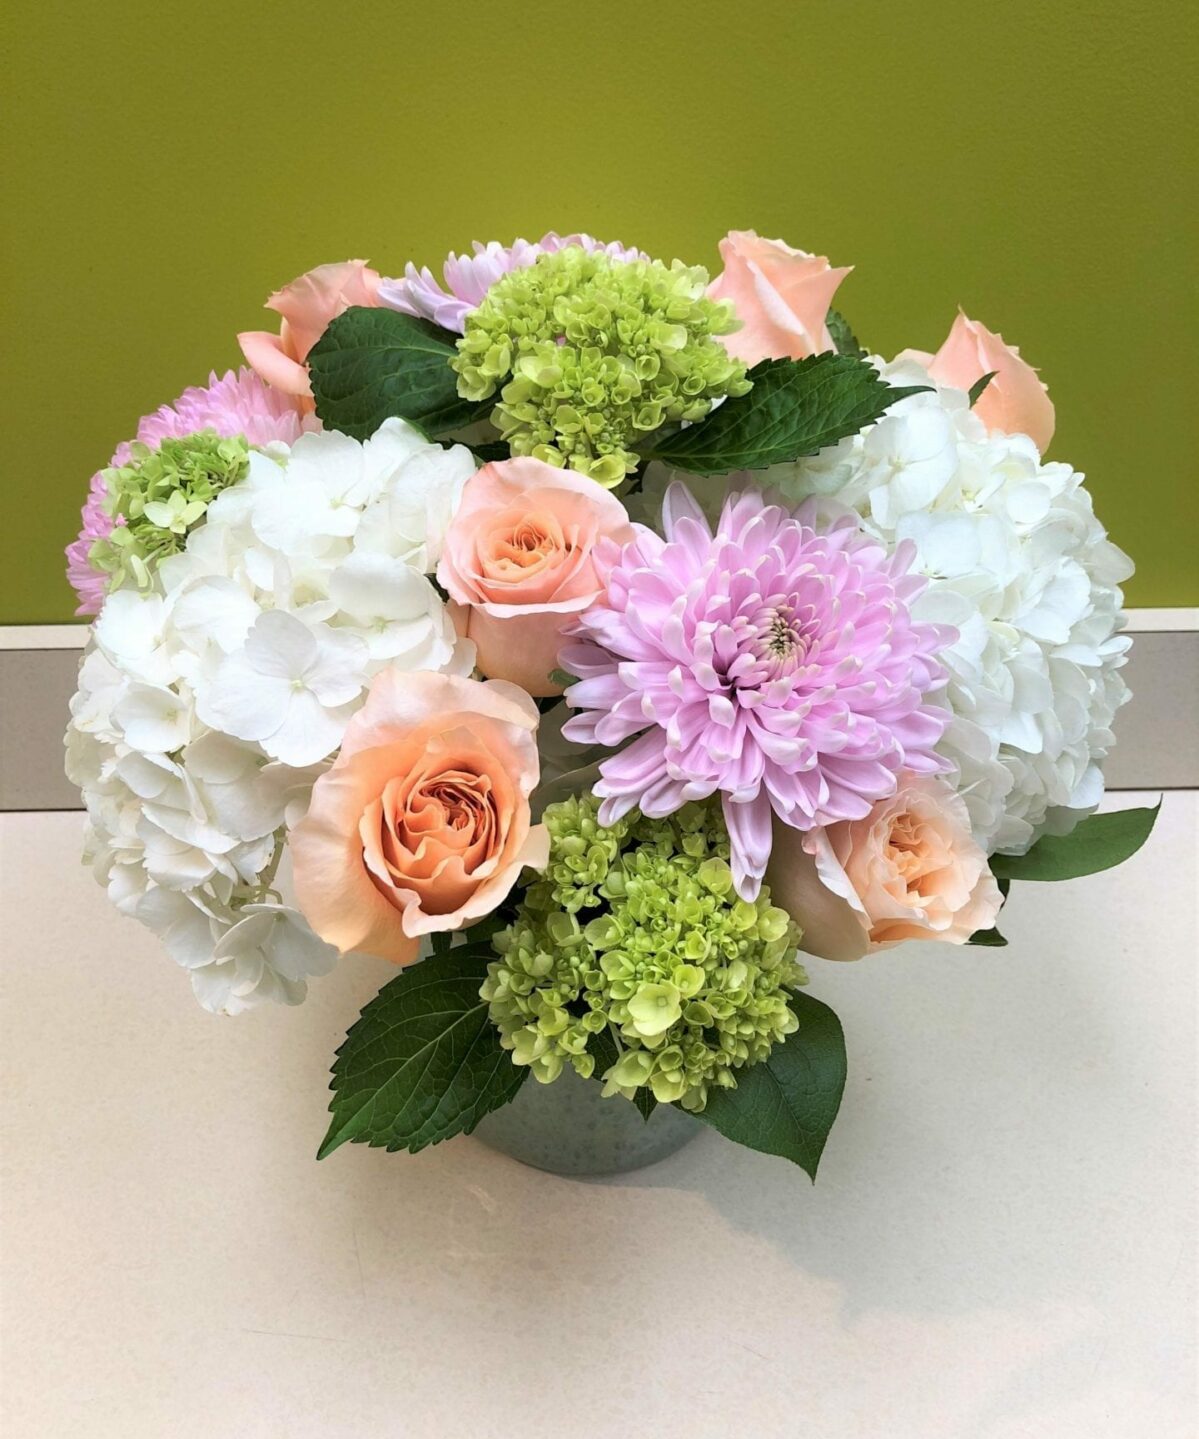 Green, Purple and White Floral Arrangement - Bergen County, NJ